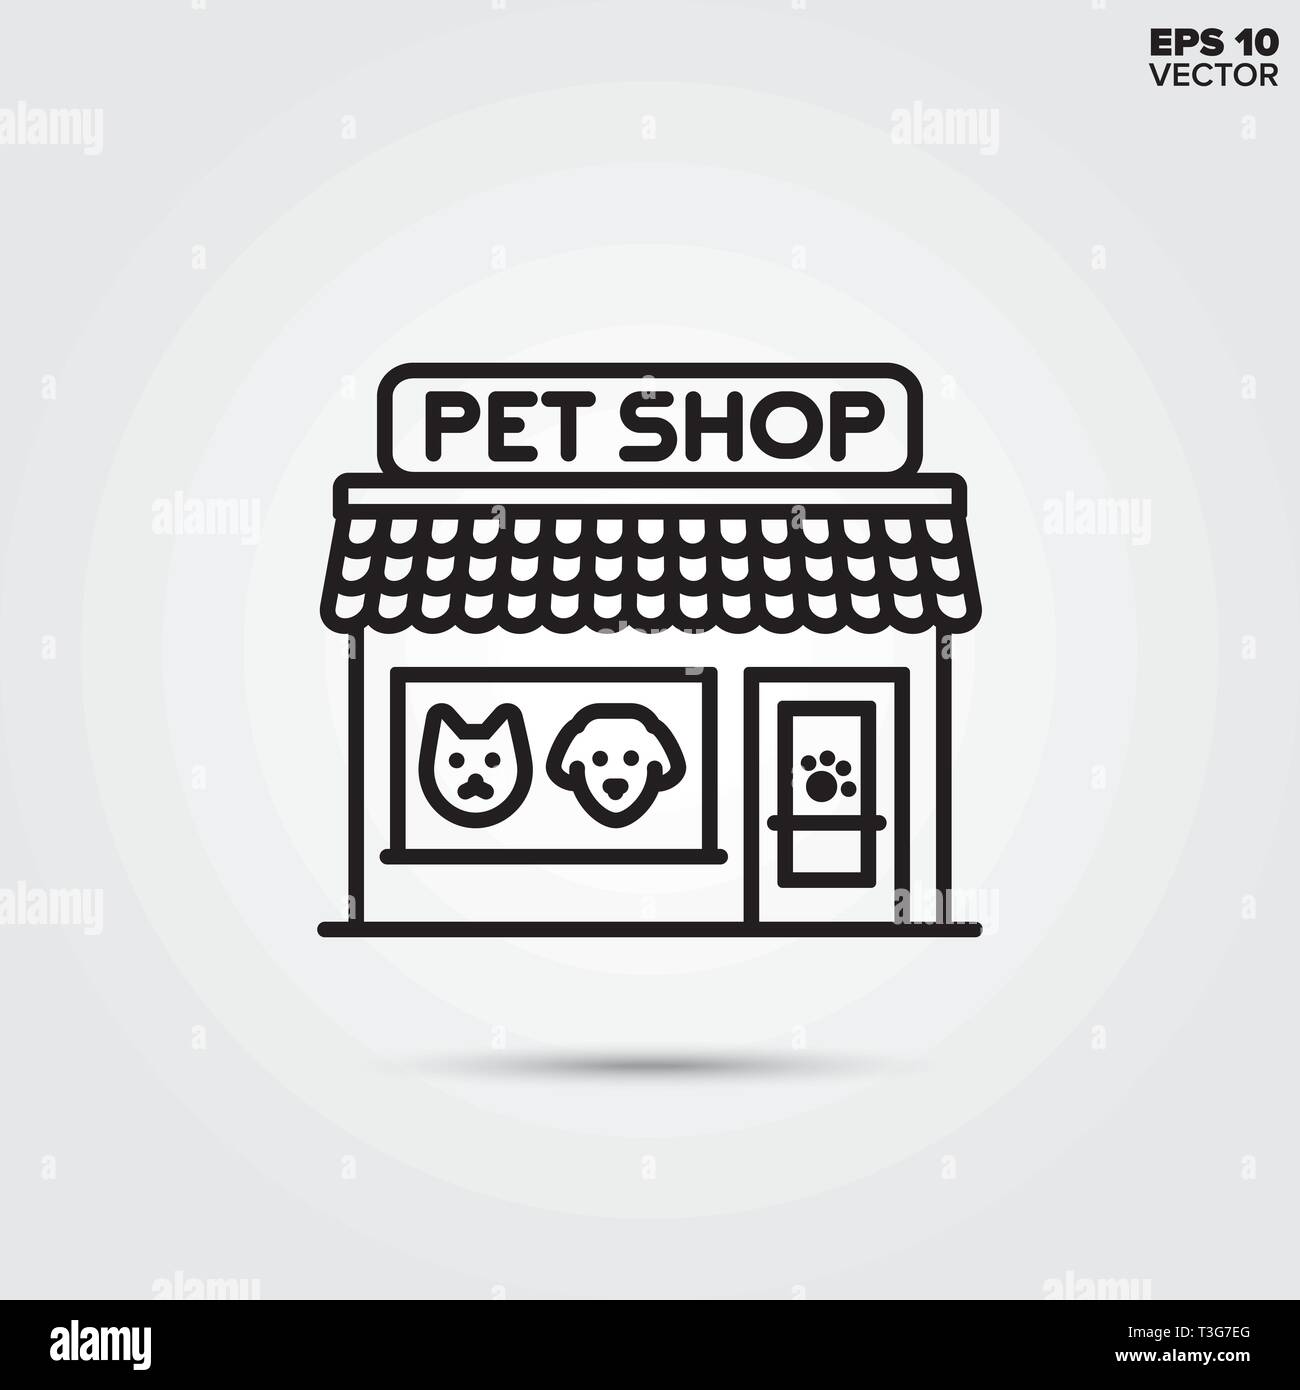 pet shop line icon. EPS 10 vector animal supplies store illustration. Stock Vector